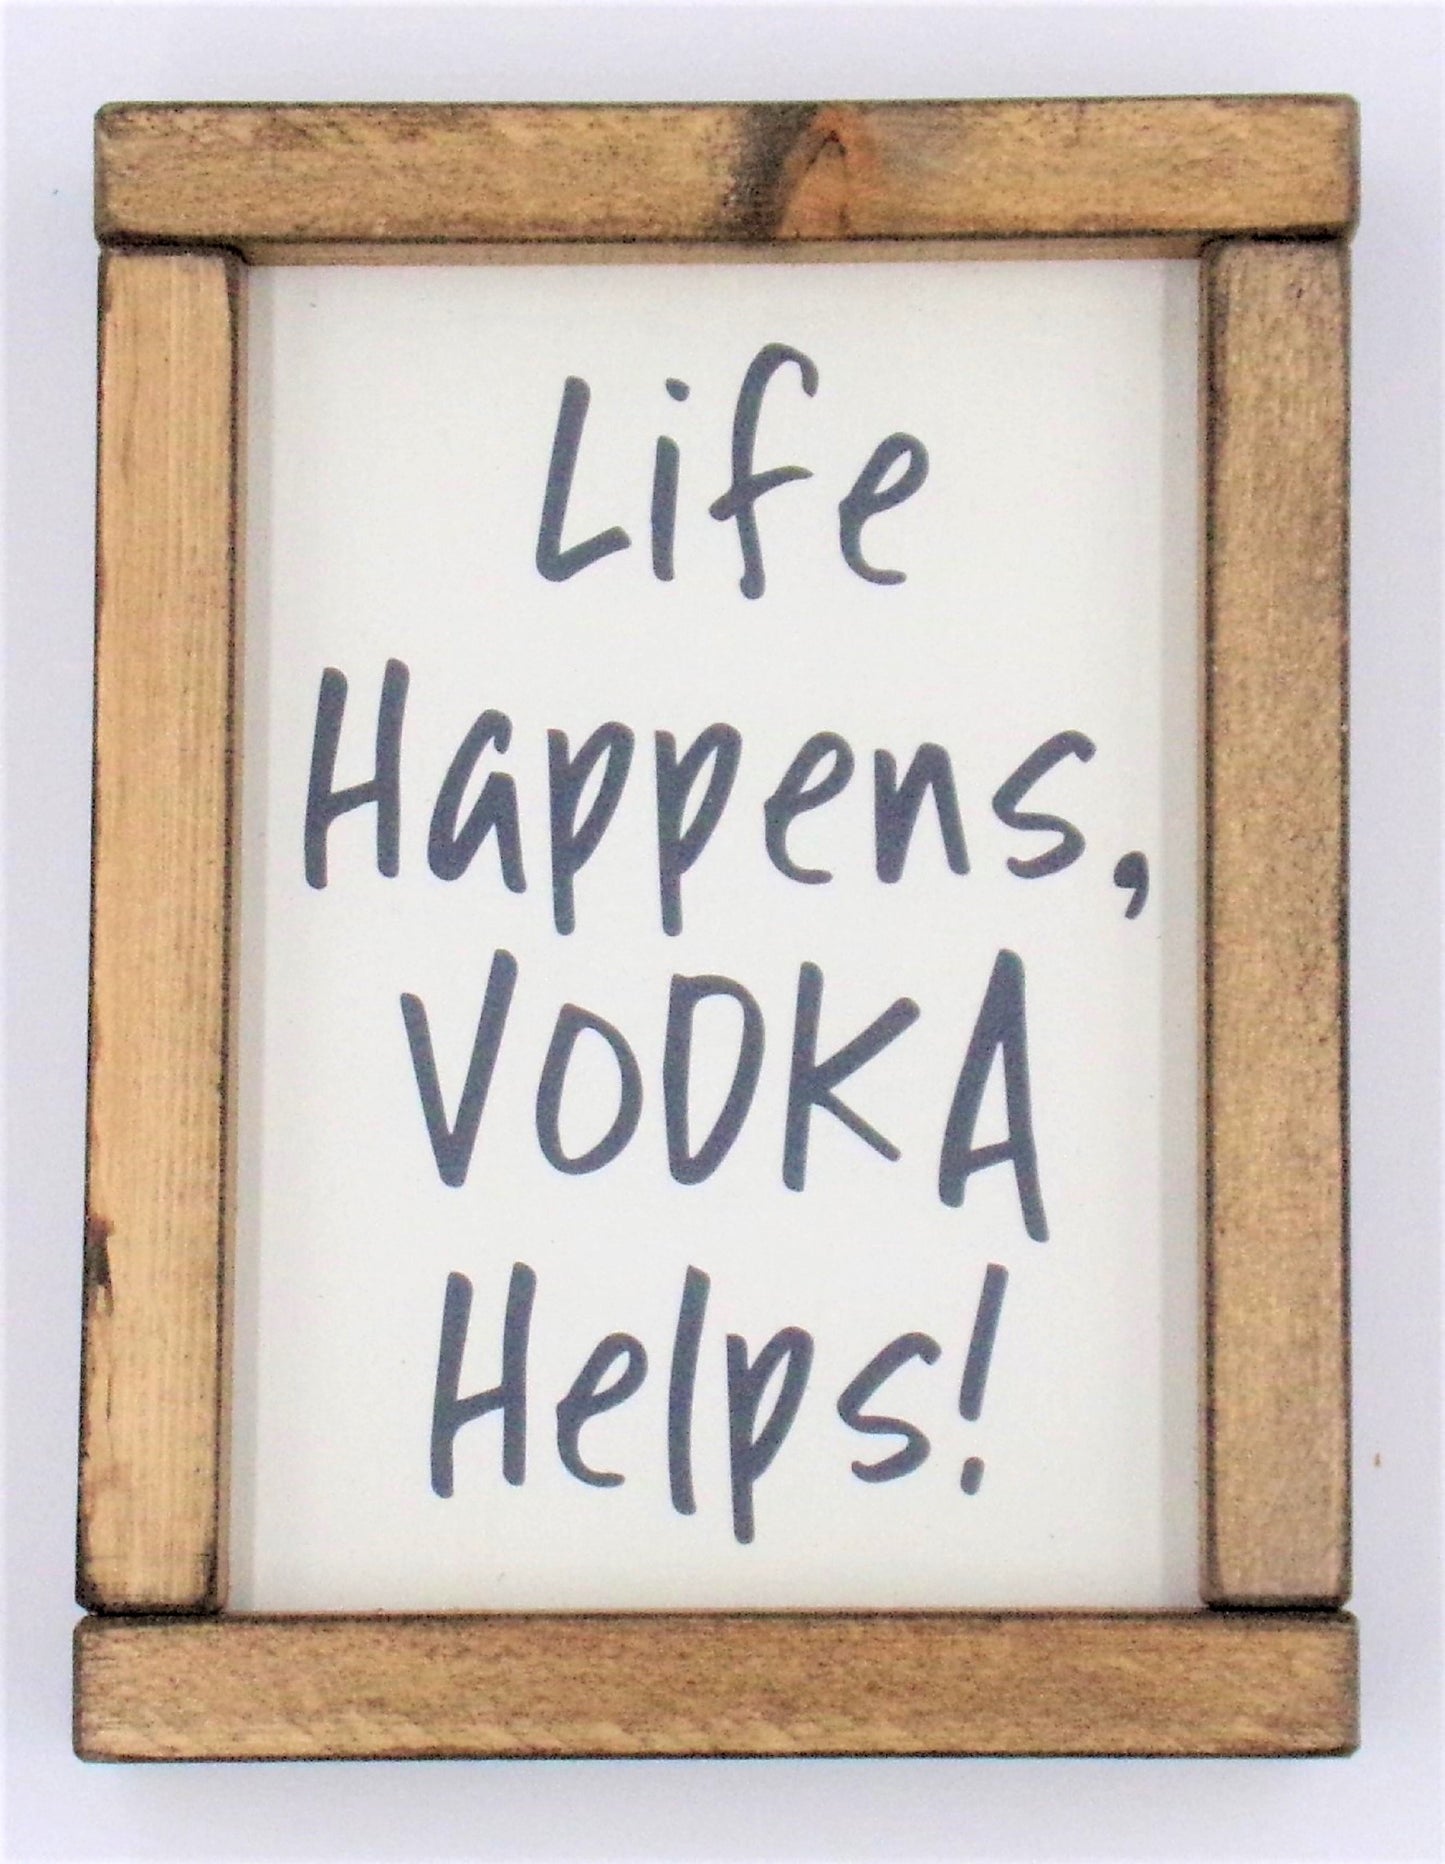 Life Happens Vodka Helps!